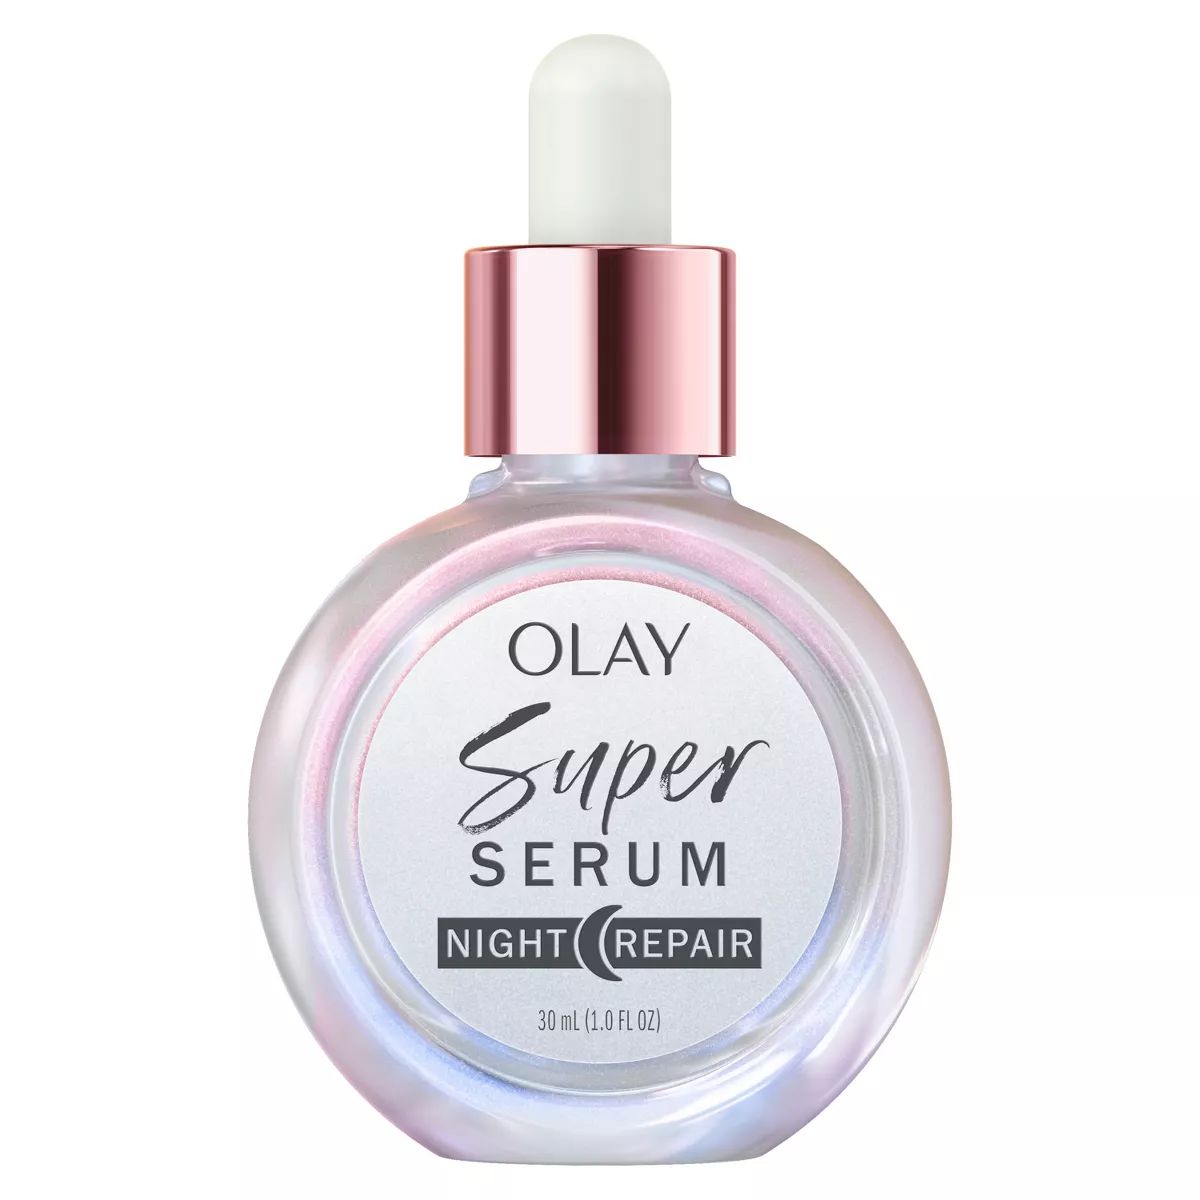 Olay Super Serum Night Repair Face Serum - Fragrance Free - 1.0 fl oz | Target